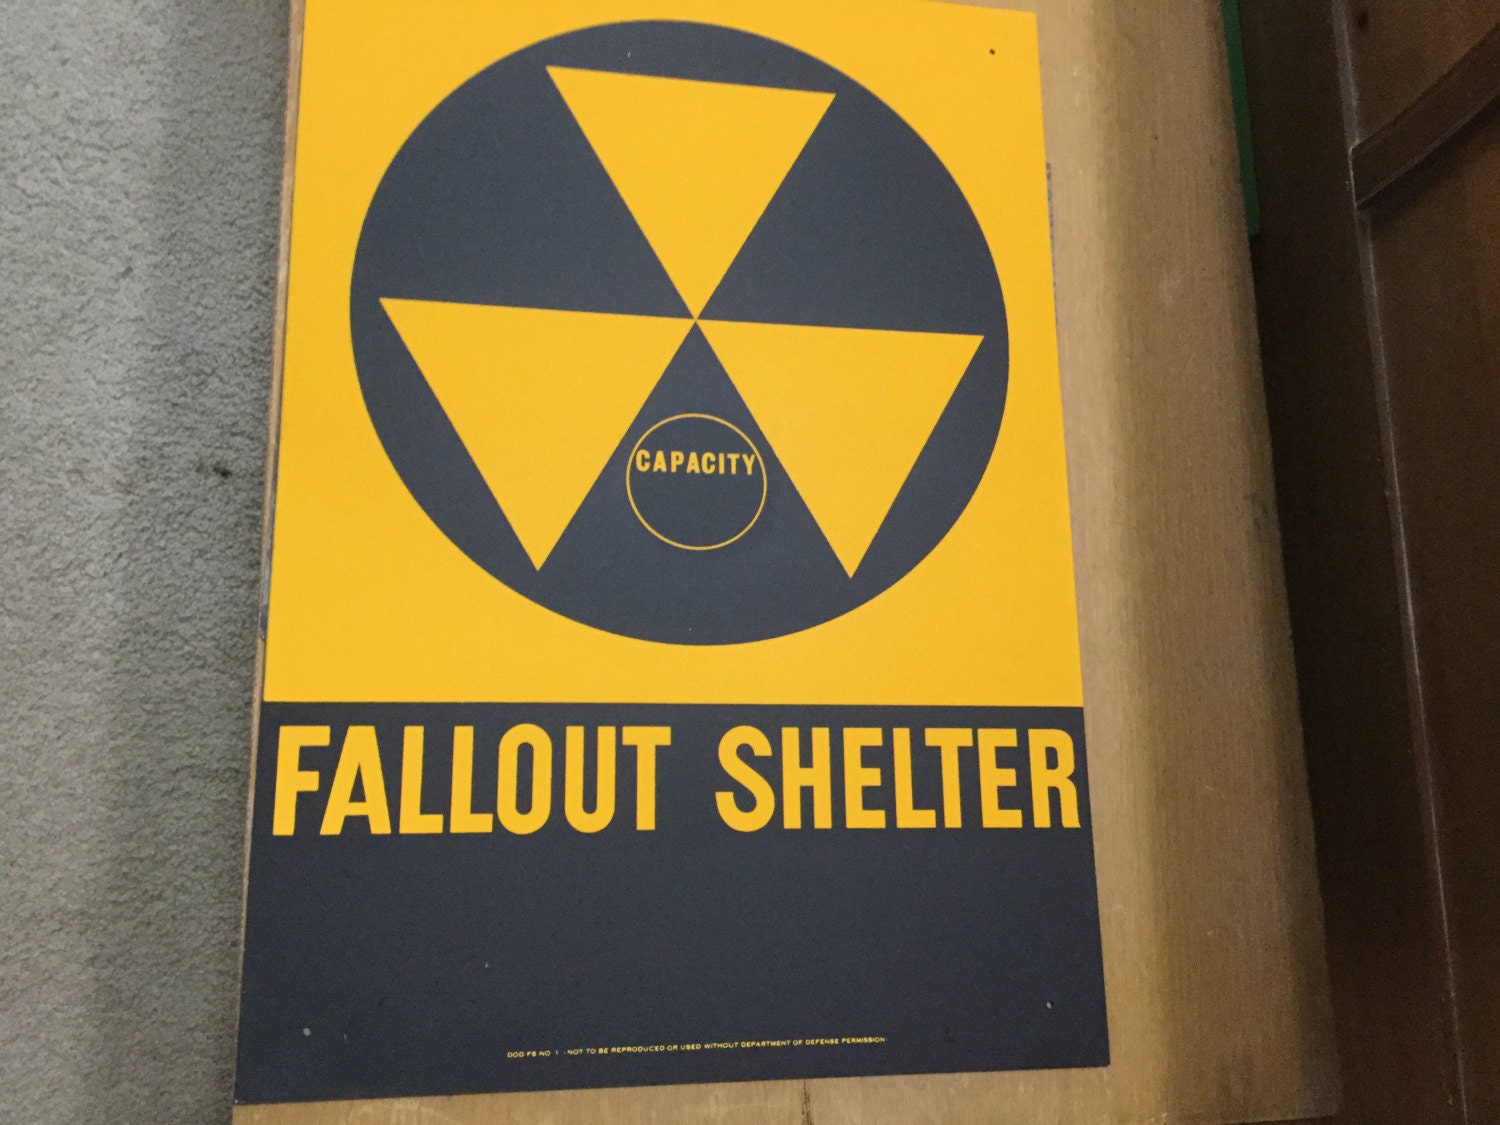 1960s vintage fallout shelter manuals online